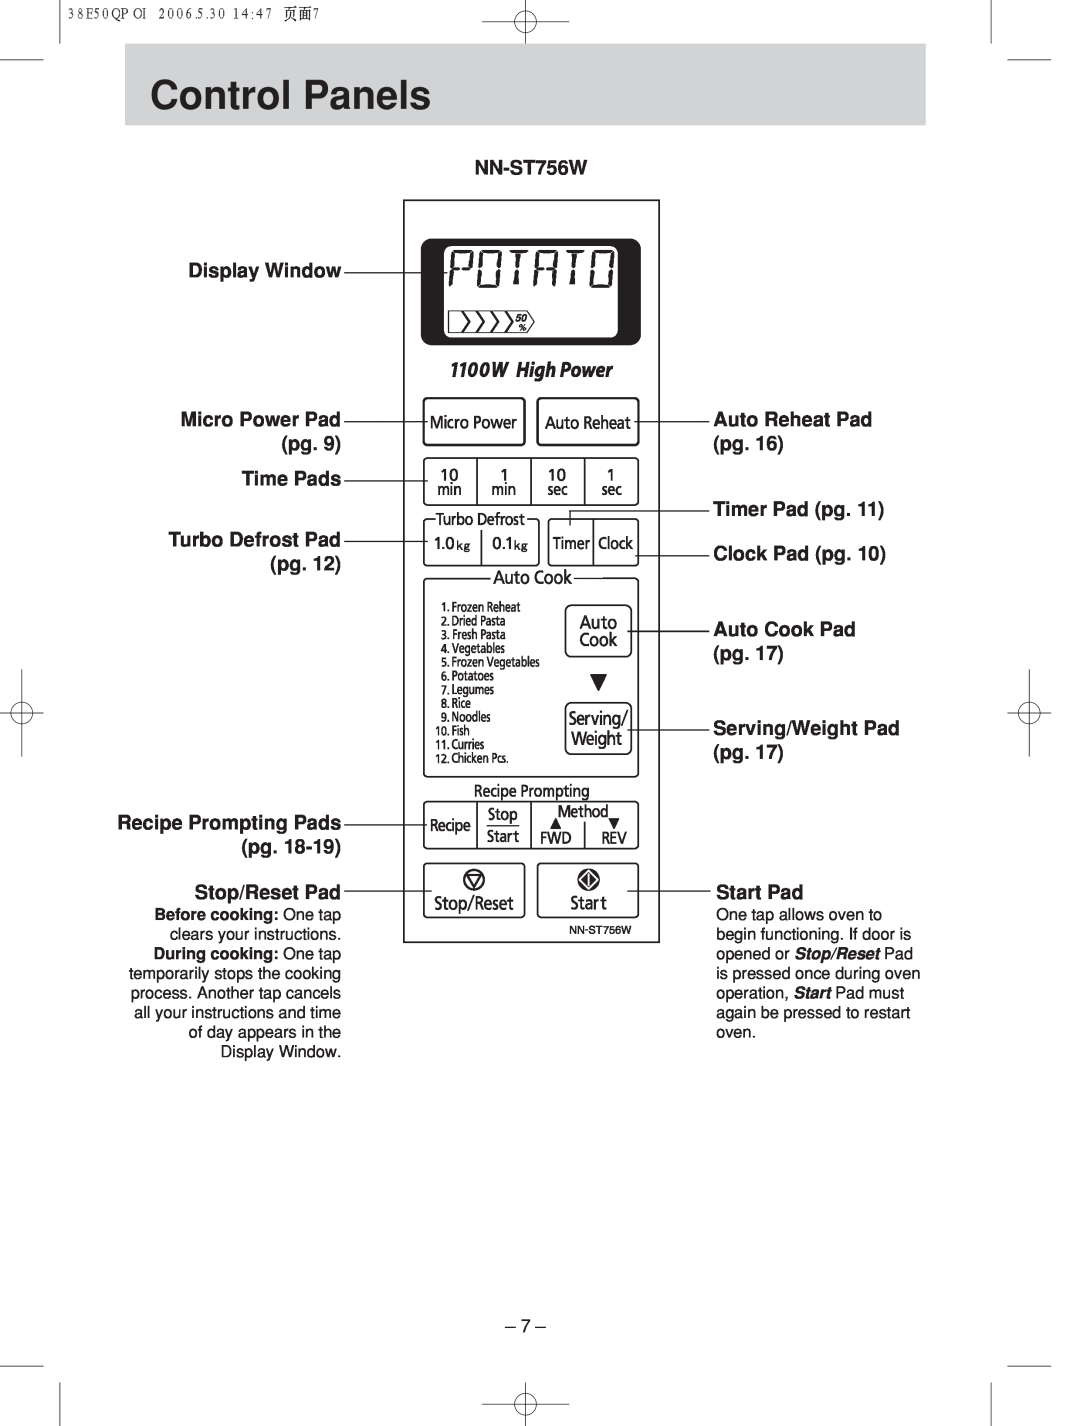 Panasonic NN-ST756W manual Display Window, Micro Power Pad, Auto Reheat Pad, Time Pads, Timer Pad pg, Turbo Defrost Pad 